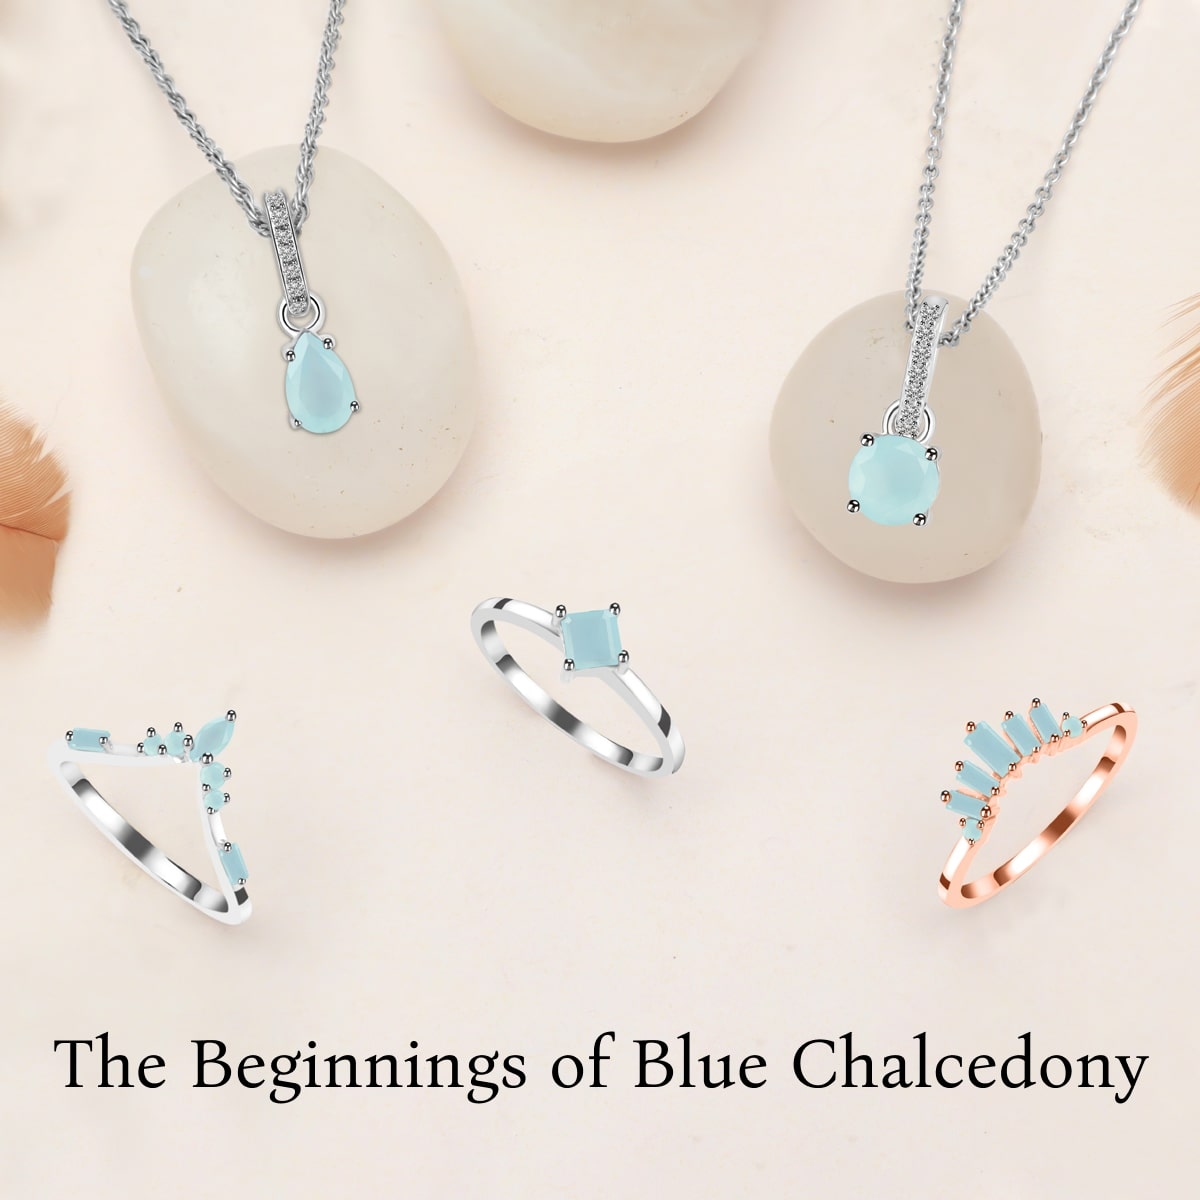 Blue Chalcedony Origins